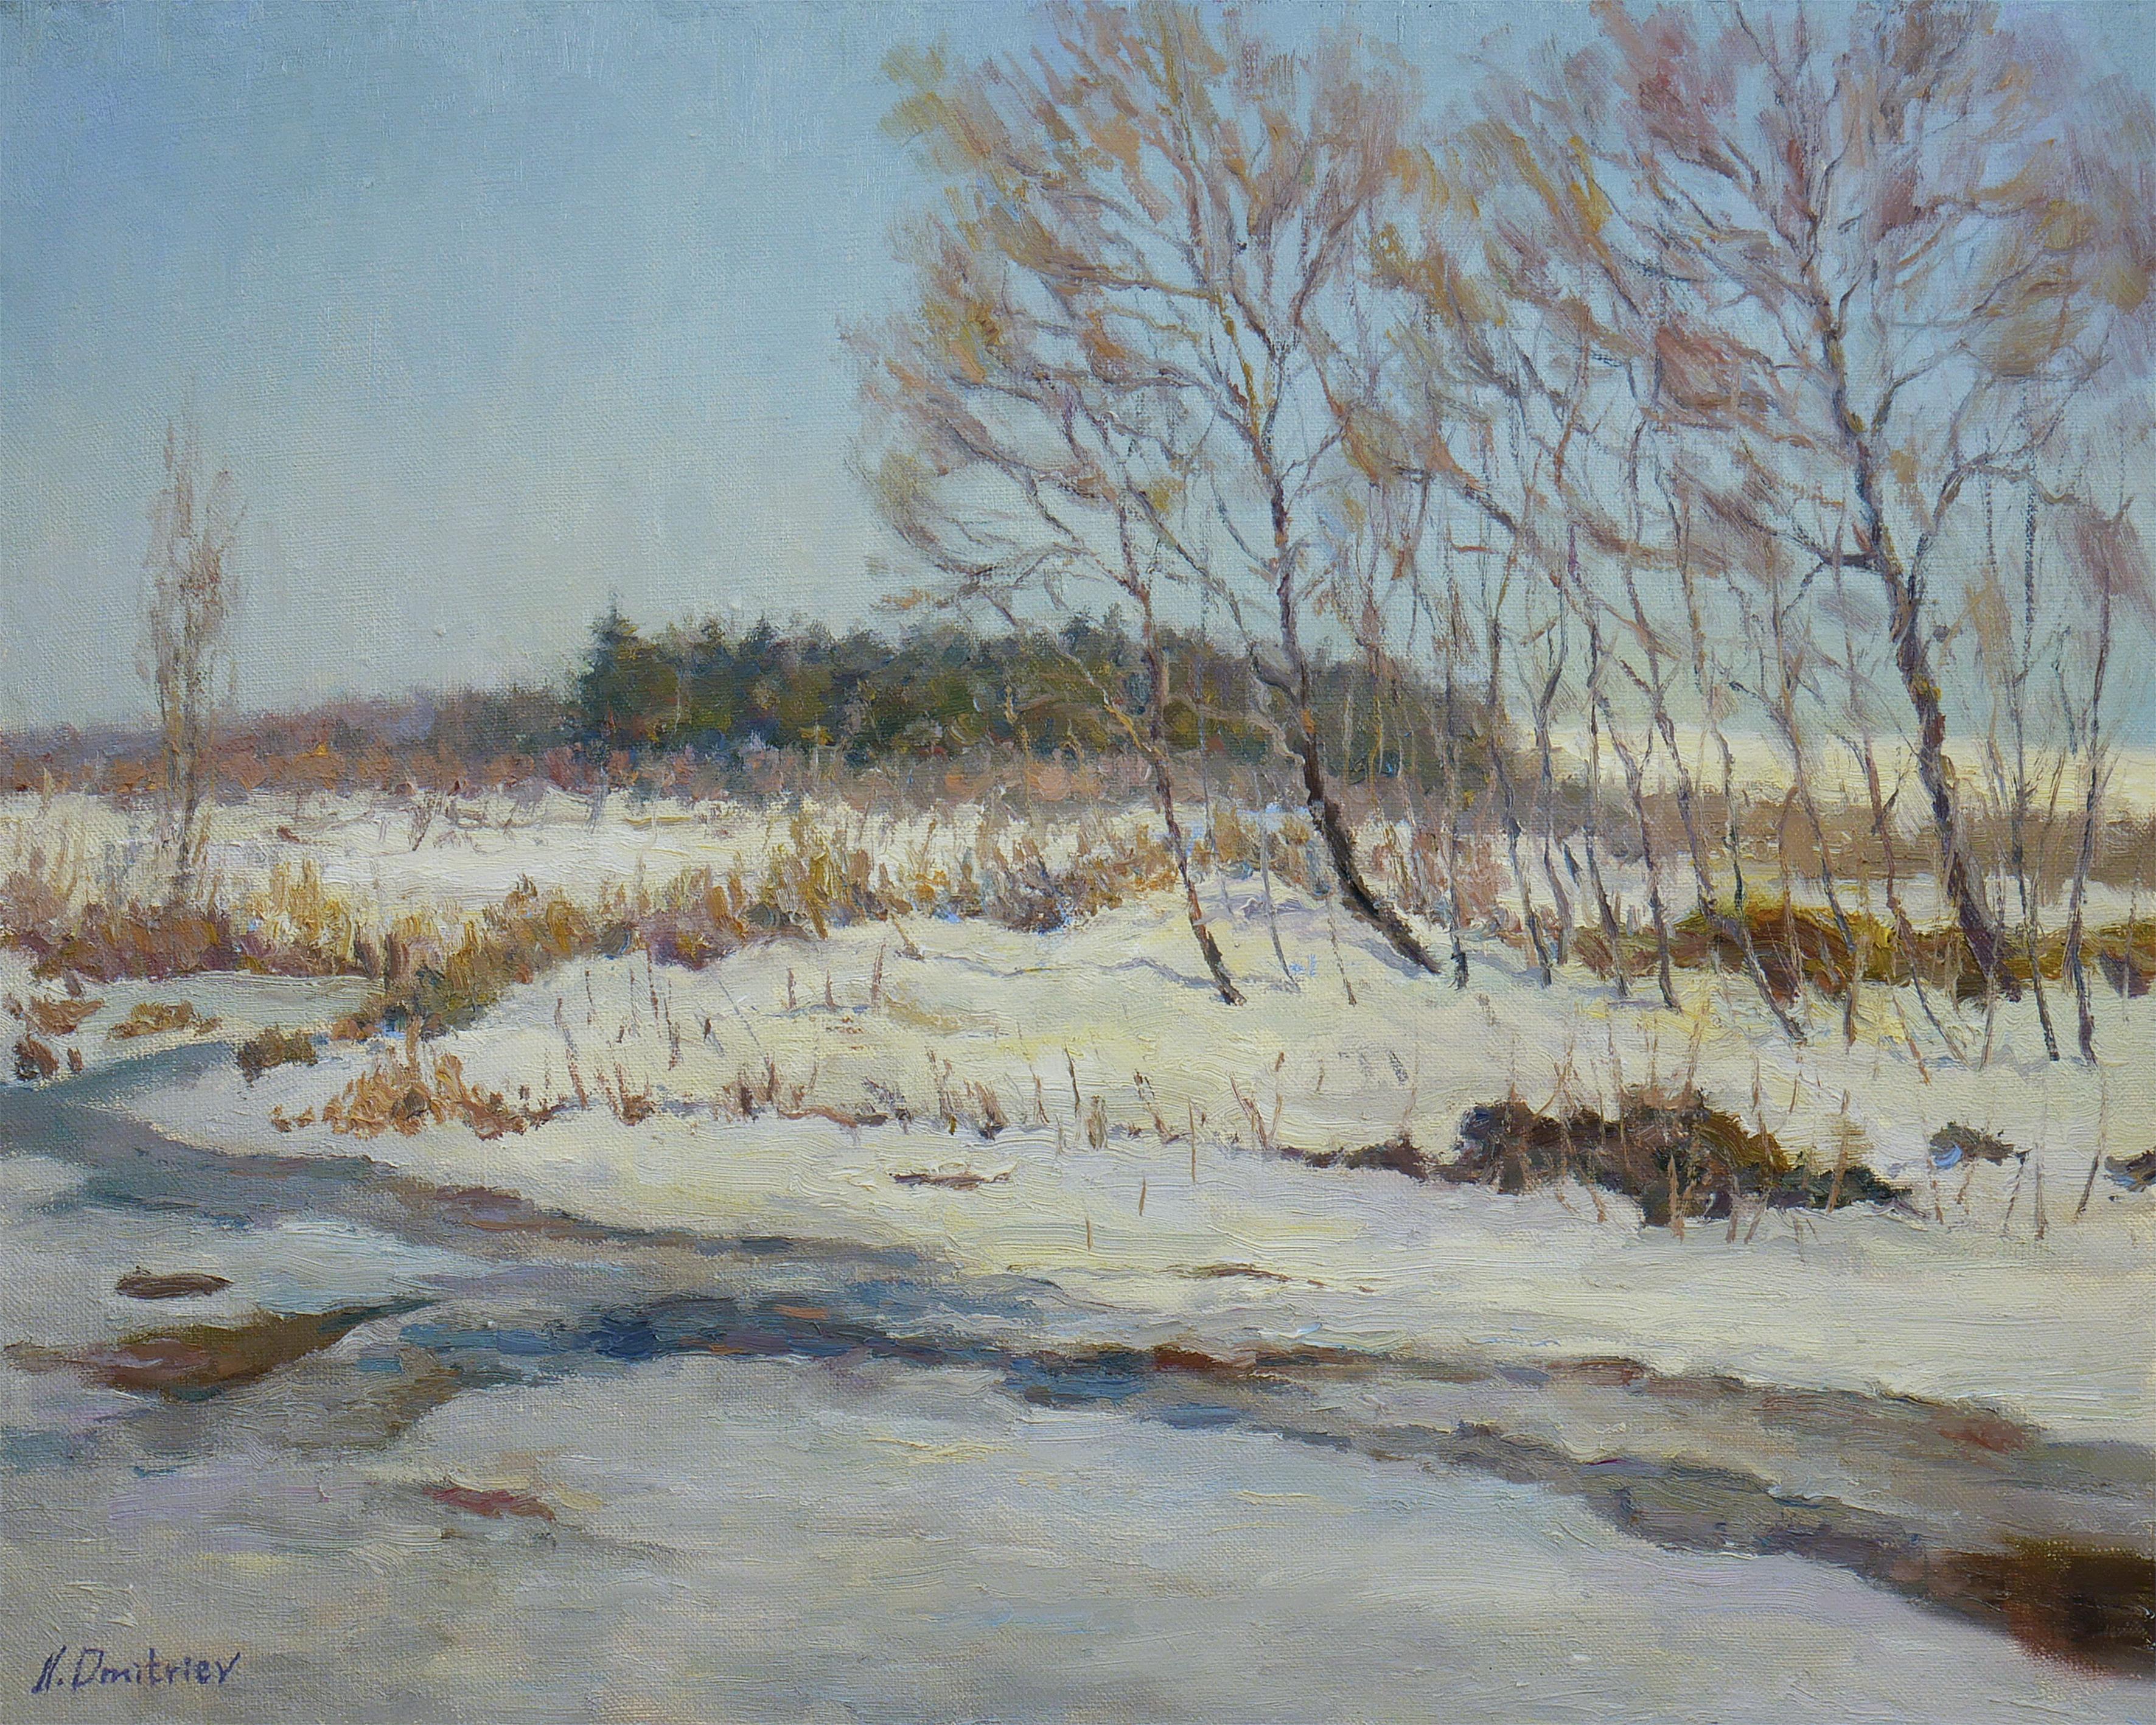 Nikolay Dmitriev Landscape Painting - The Sunny Winter Days - original landscape painting